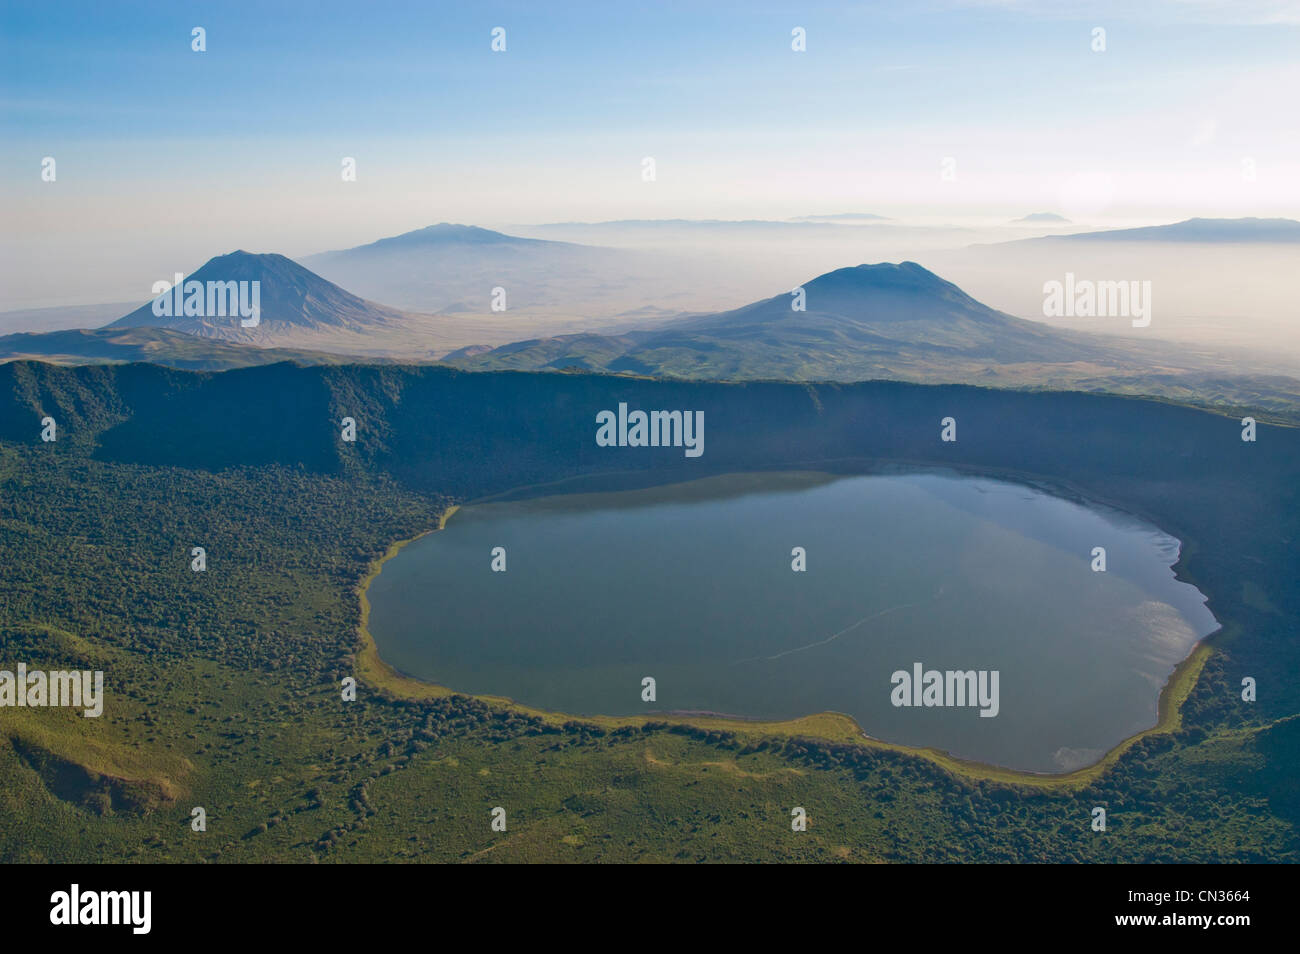 Empakai crater and lake, in the background Ol Doinyo Lengai (left) and Keremasi (right), aerial view, Tanzania Stock Photo